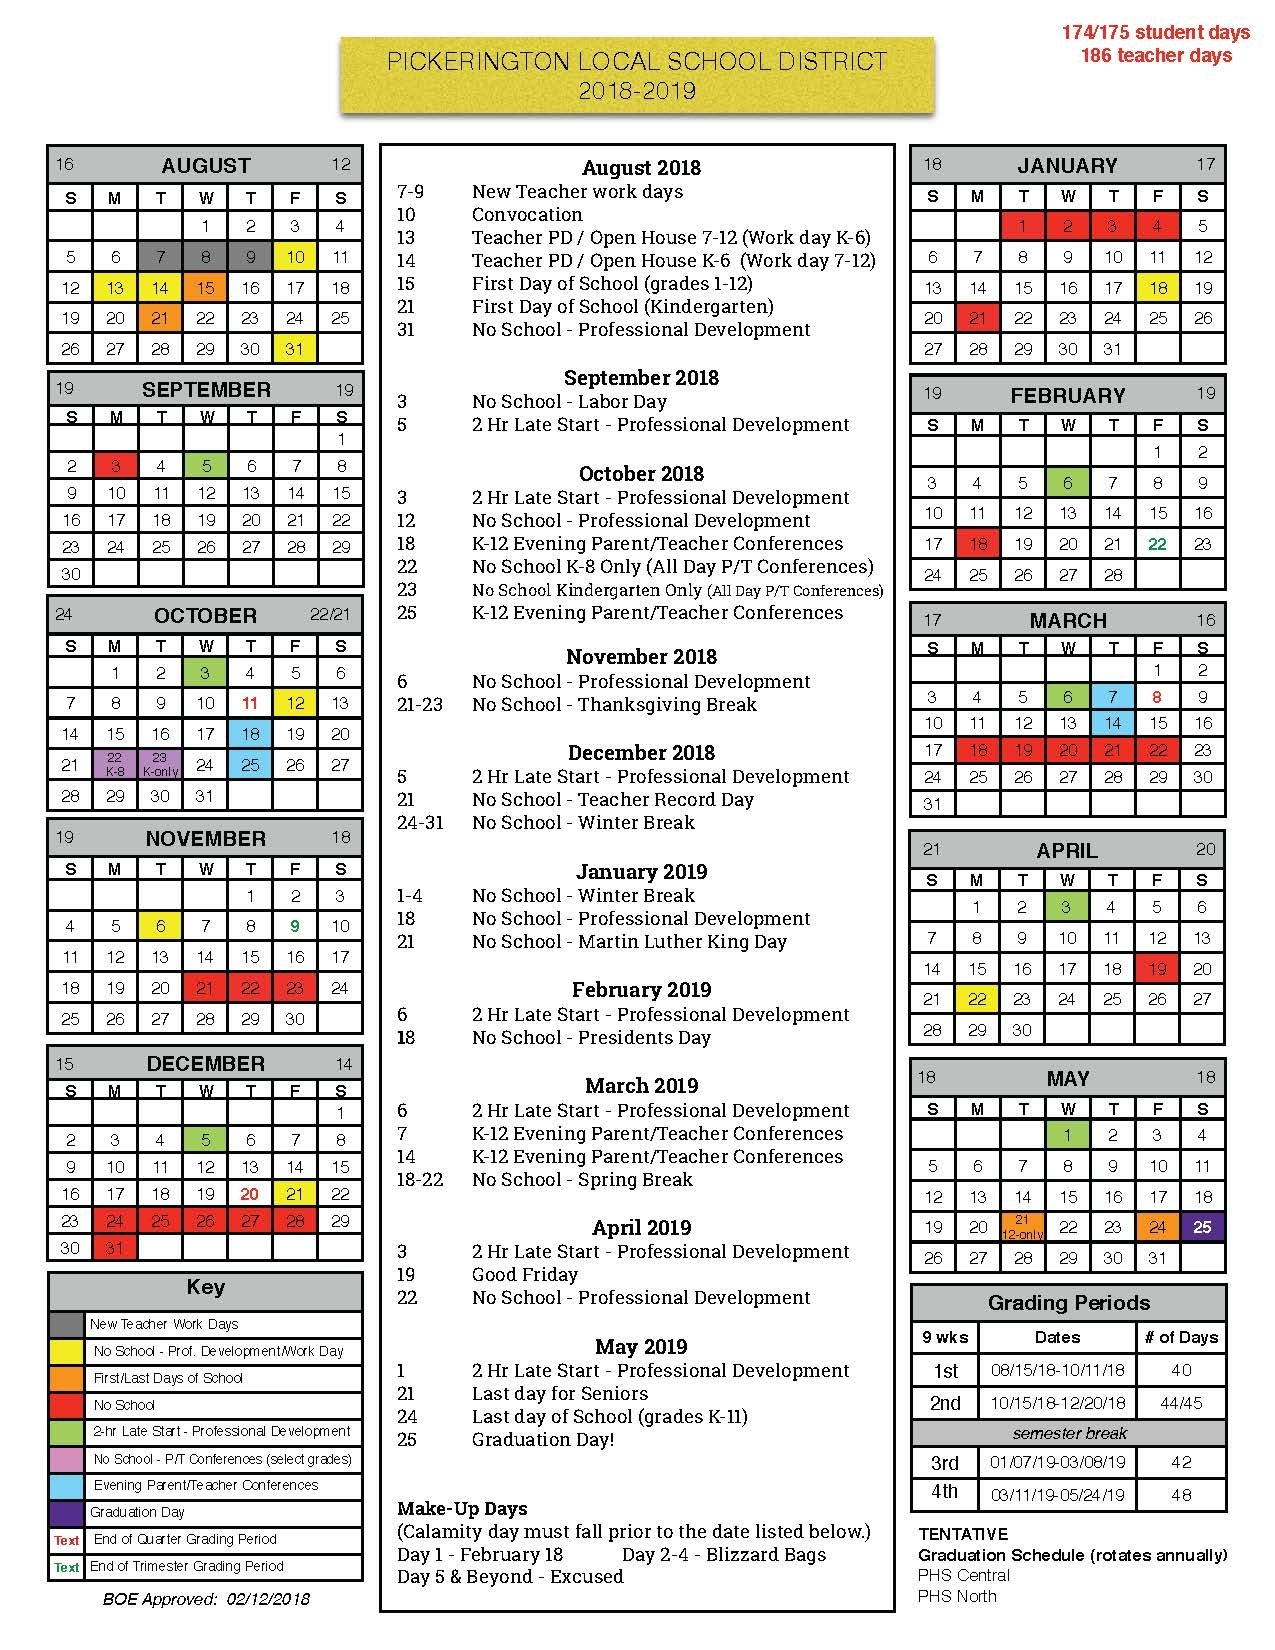 Board Of Education Approves 2018-19 Calendar - Pickerington Local Is 7 School Calendar